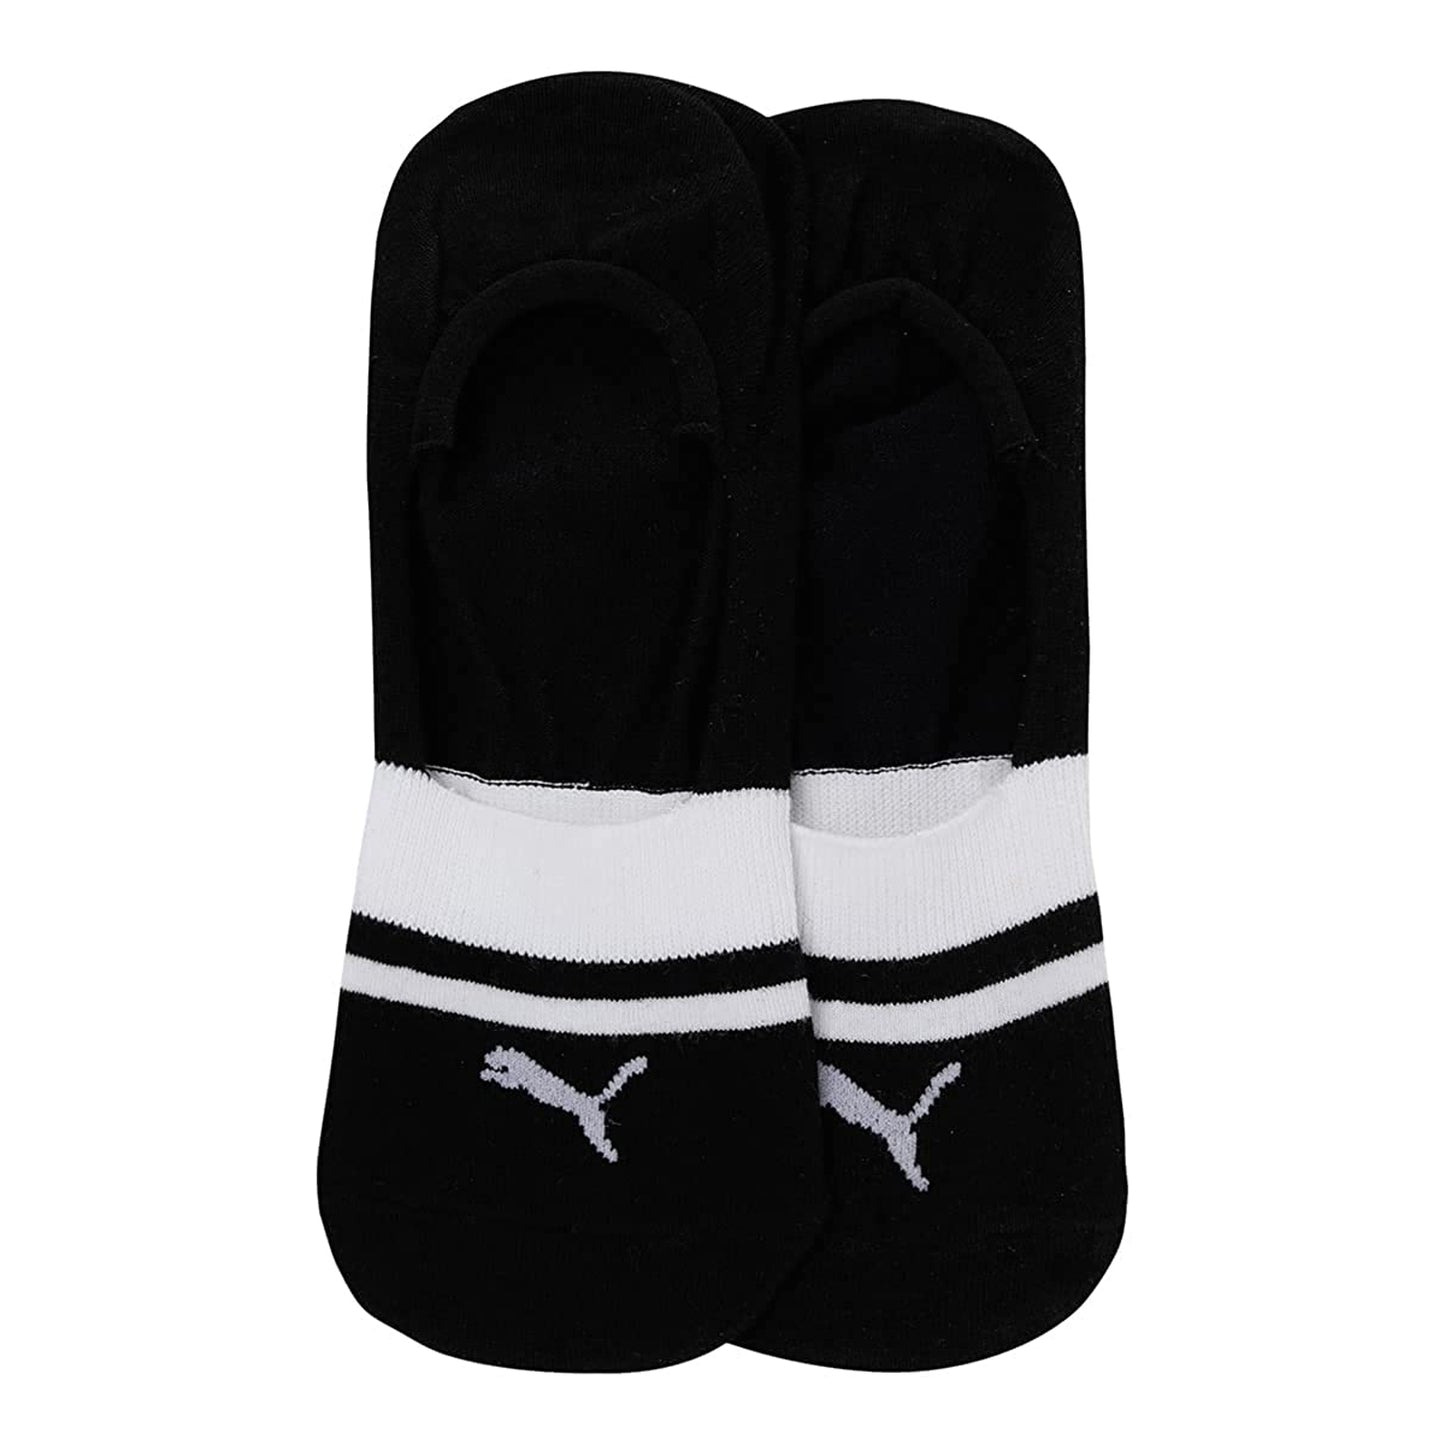 Puma Heritage Footie Unisex Socks, 3 Pairs, Black/Black/Black - Best Price online Prokicksports.com